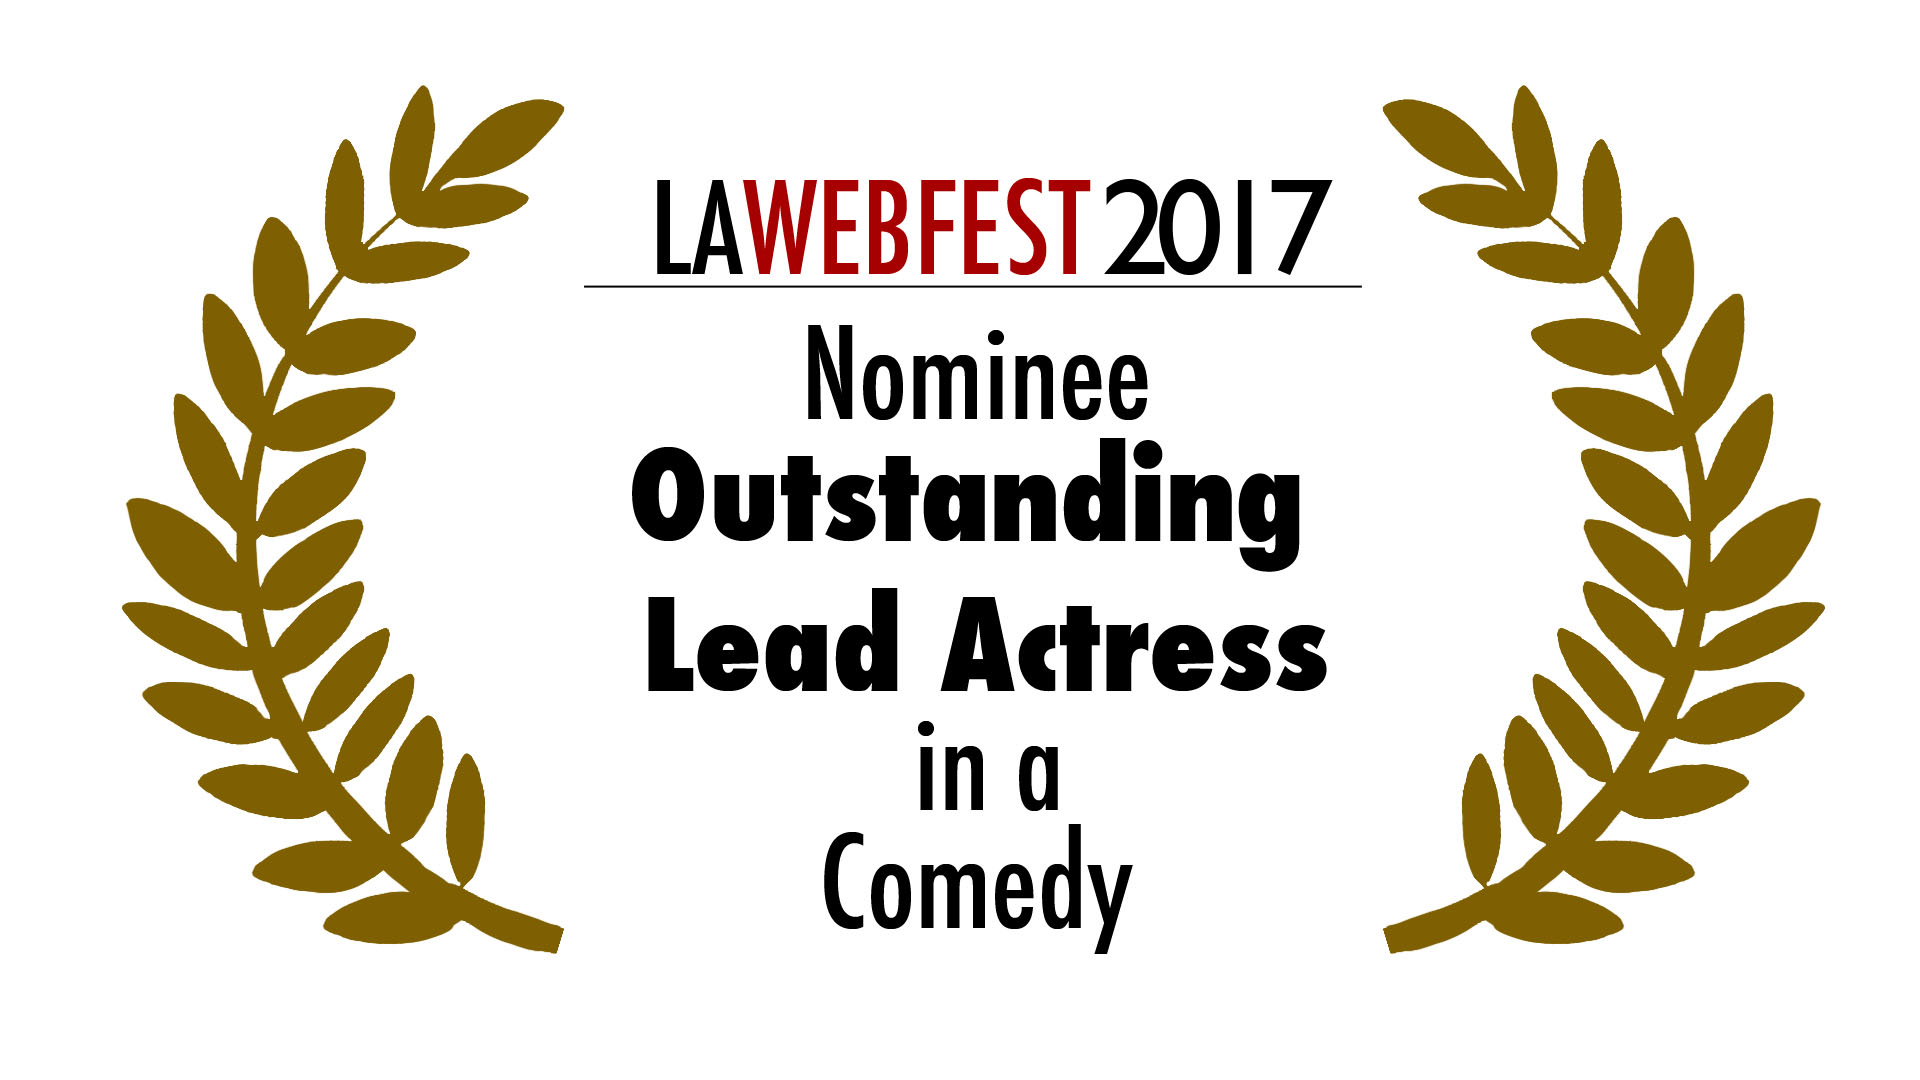 LA Webfest 2017 Lead Actress nominee